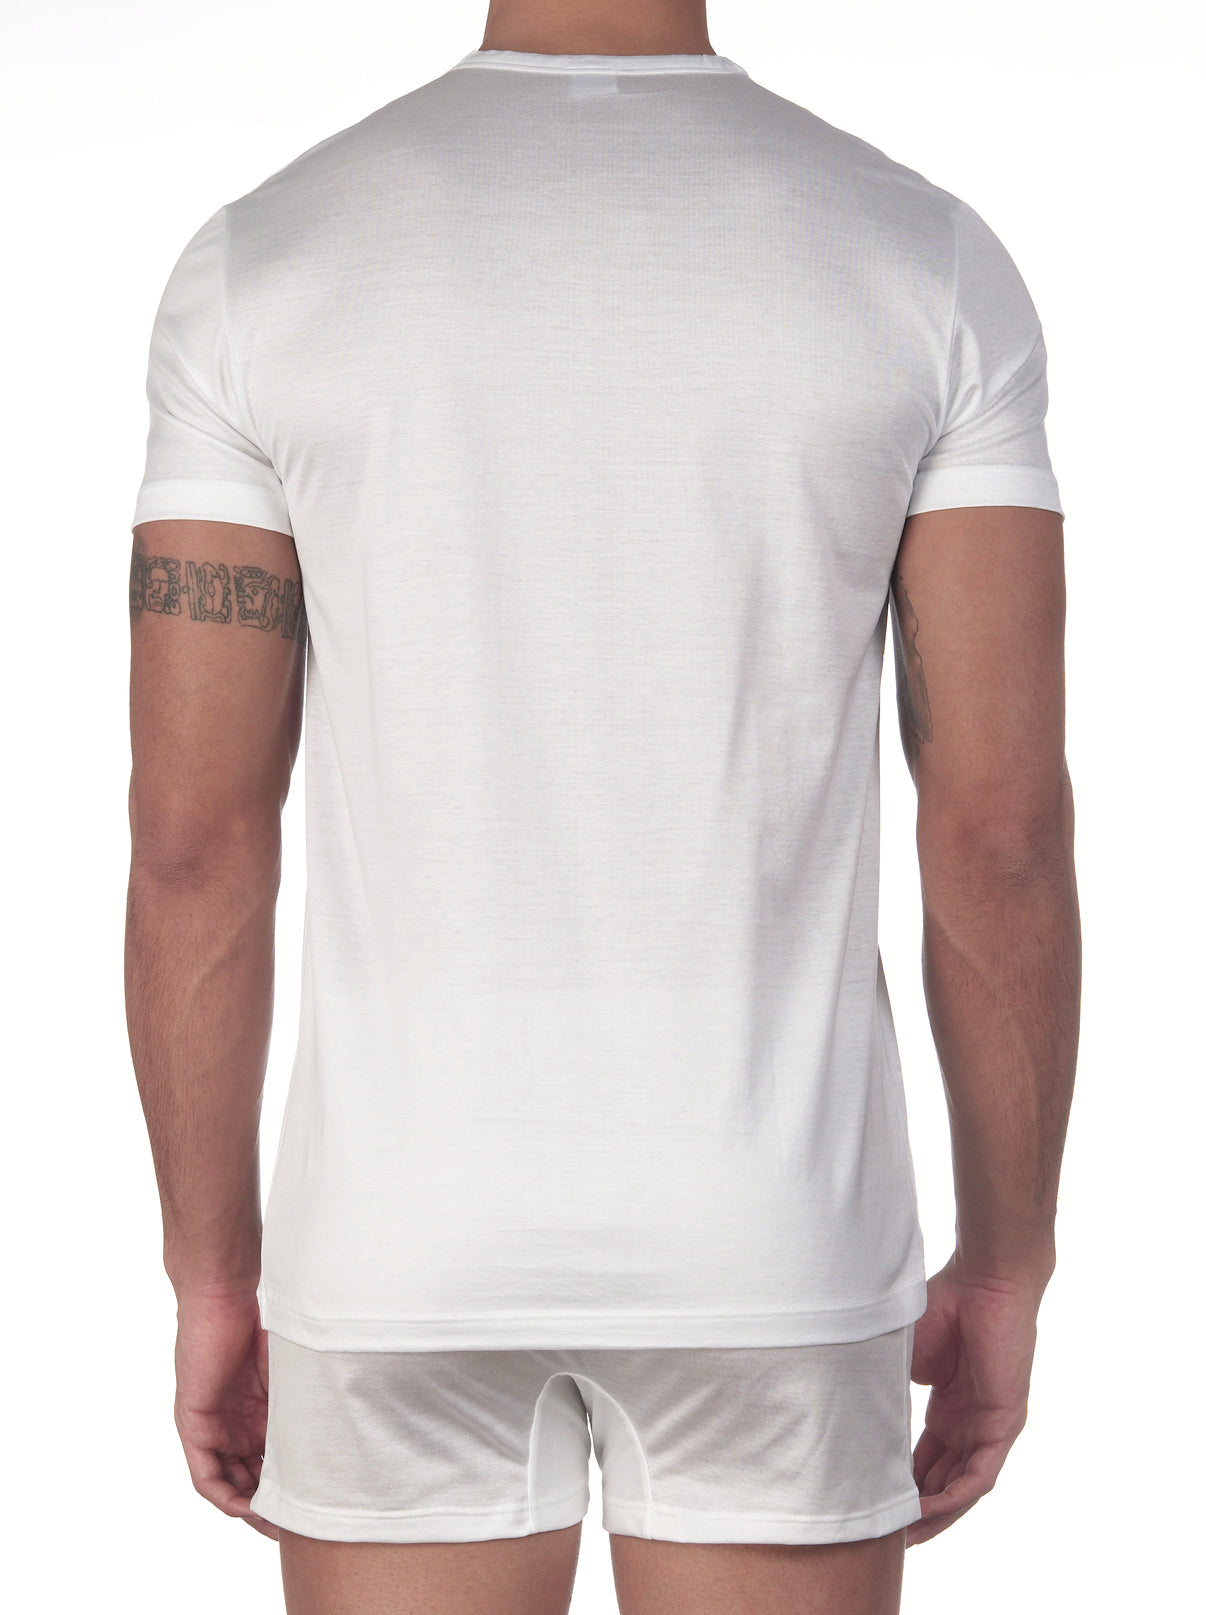 Filoscozia® T-Shirt V-Neck 2602 - Oscalito